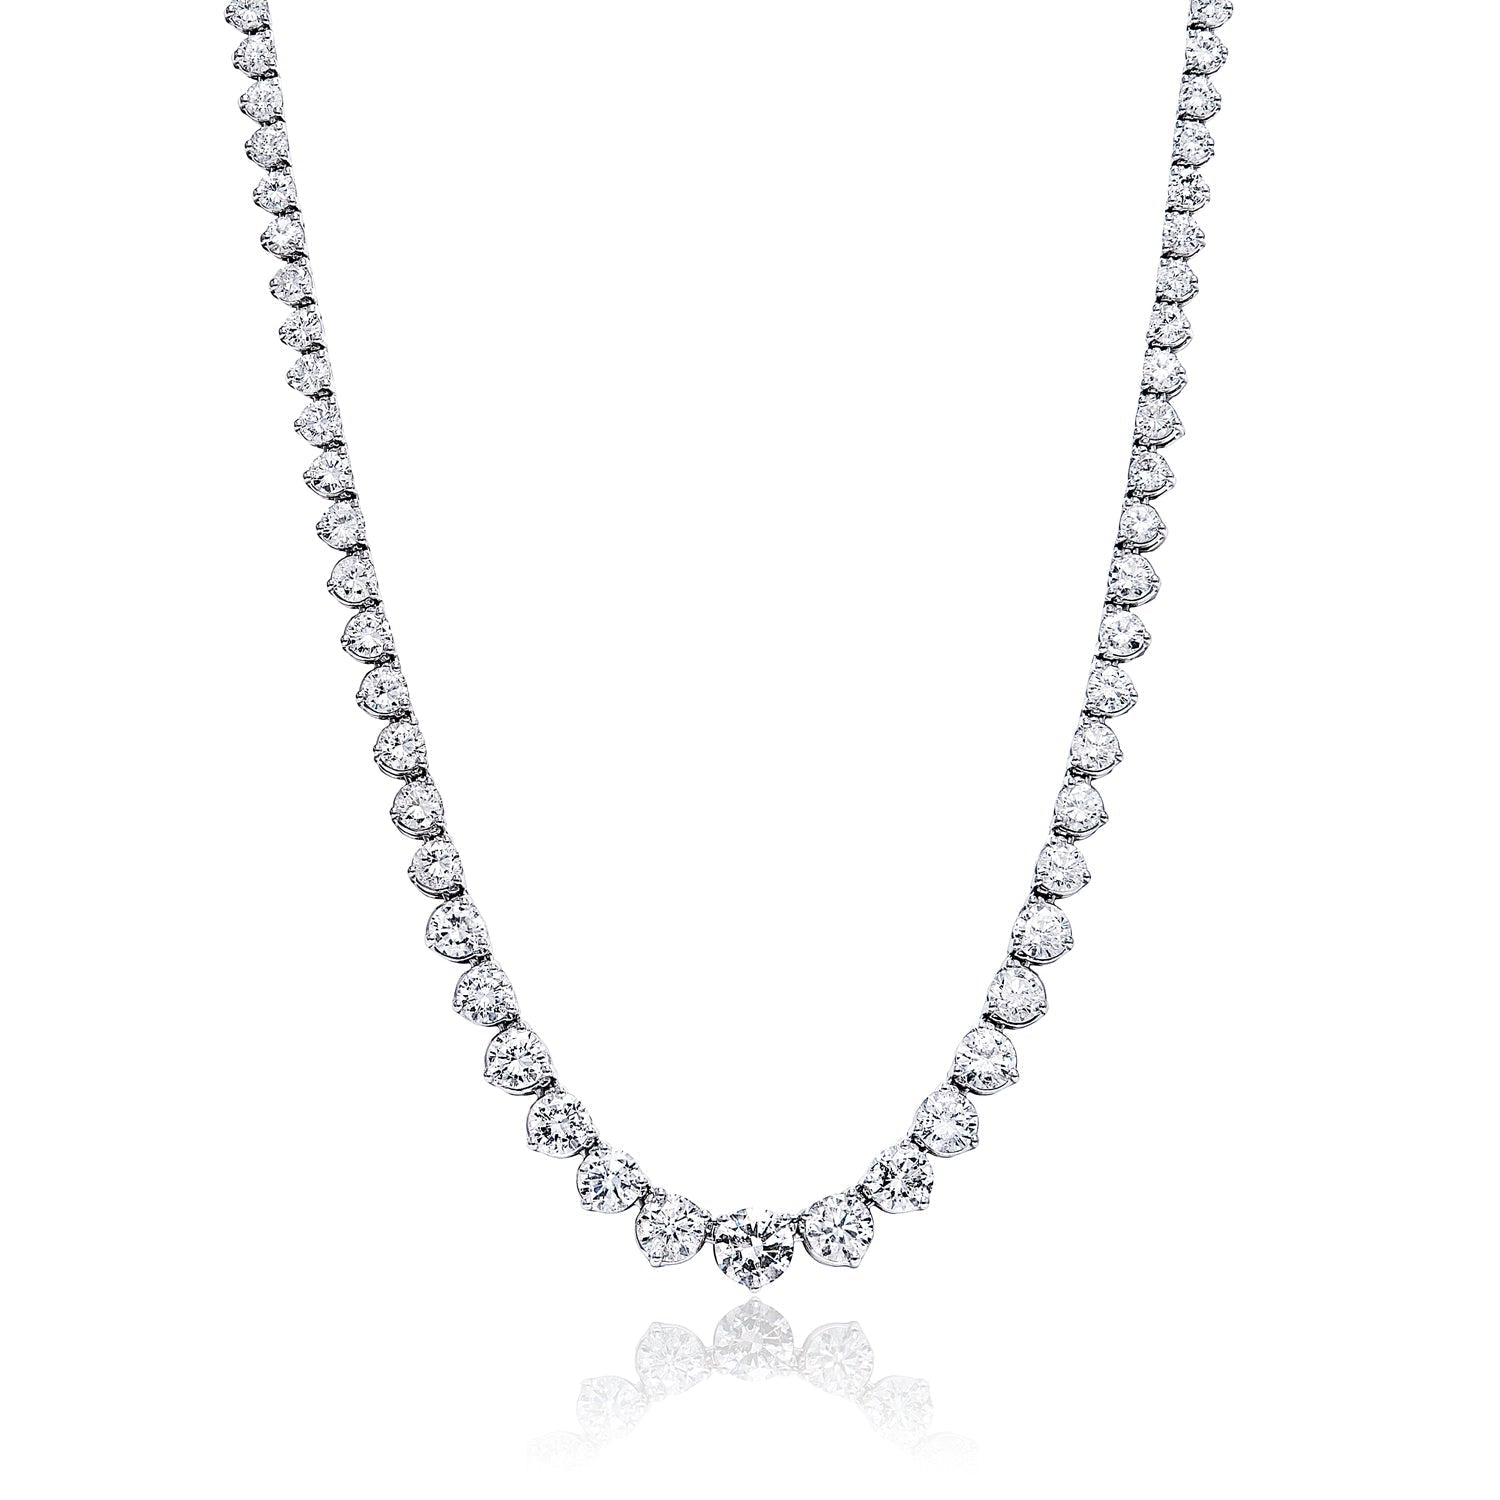 Heaven 23 Carat Round Brilliant Diamond Necklace in 14 Karat White Gold For Ladies Full View